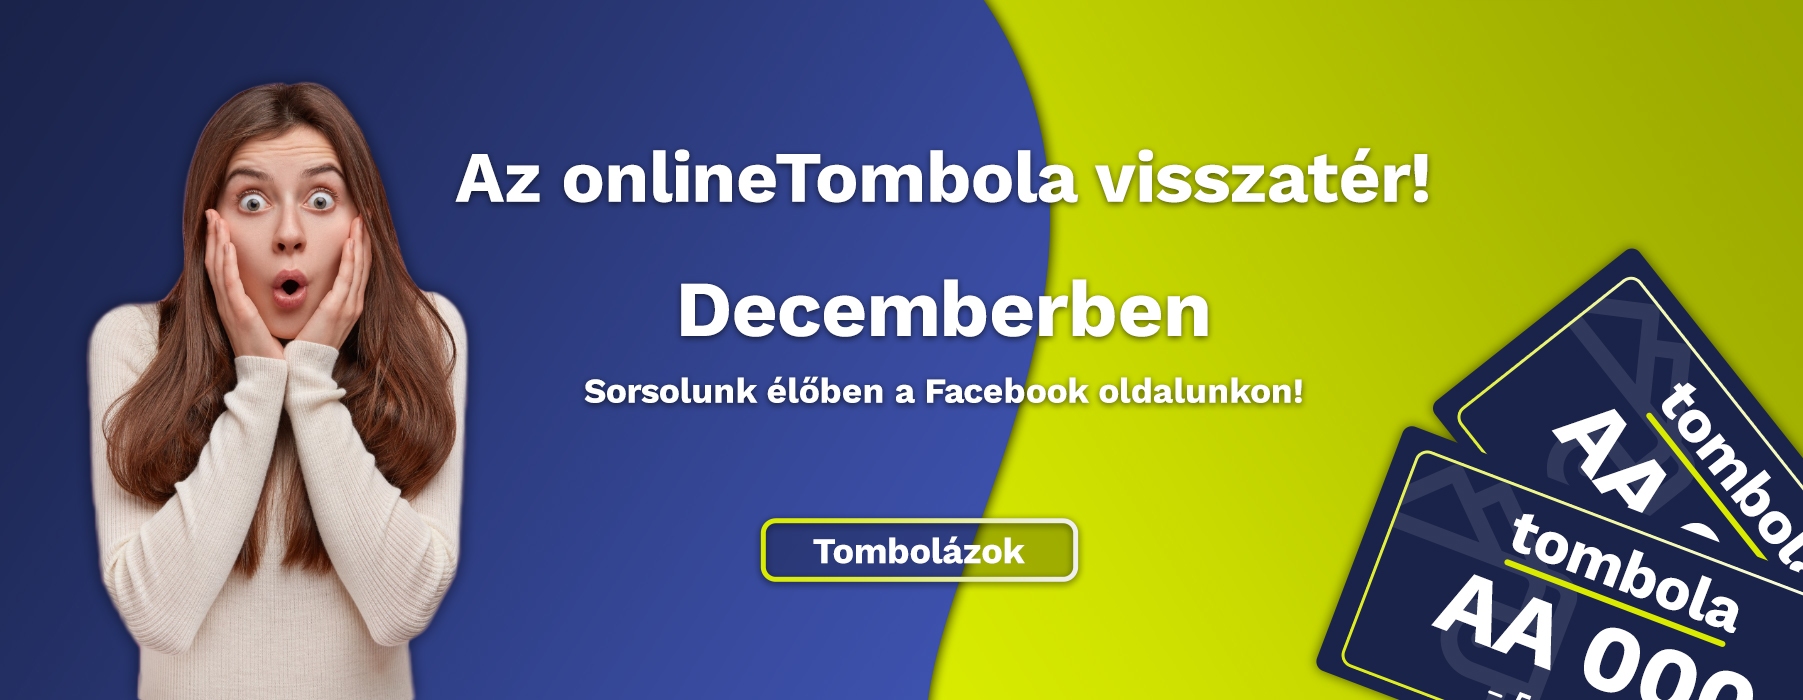 onlineTombola